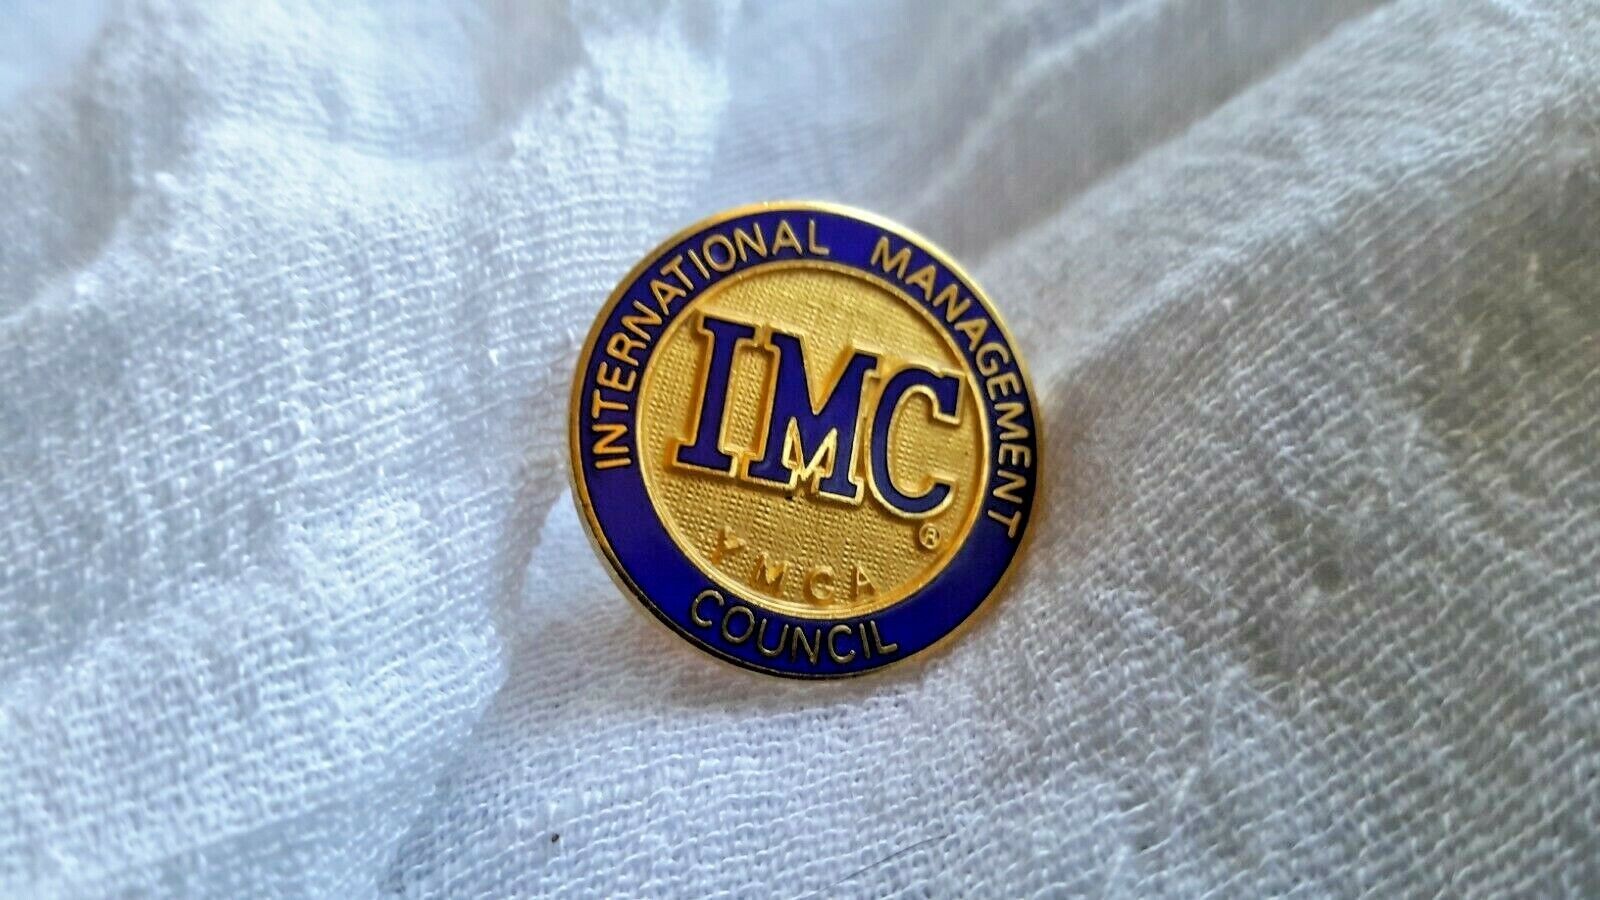 YMCA IMC INTERNATIONAL MANGEMENT COUNCIL HAT LAPEL PIN FRATERNAL ORGANIZATION 